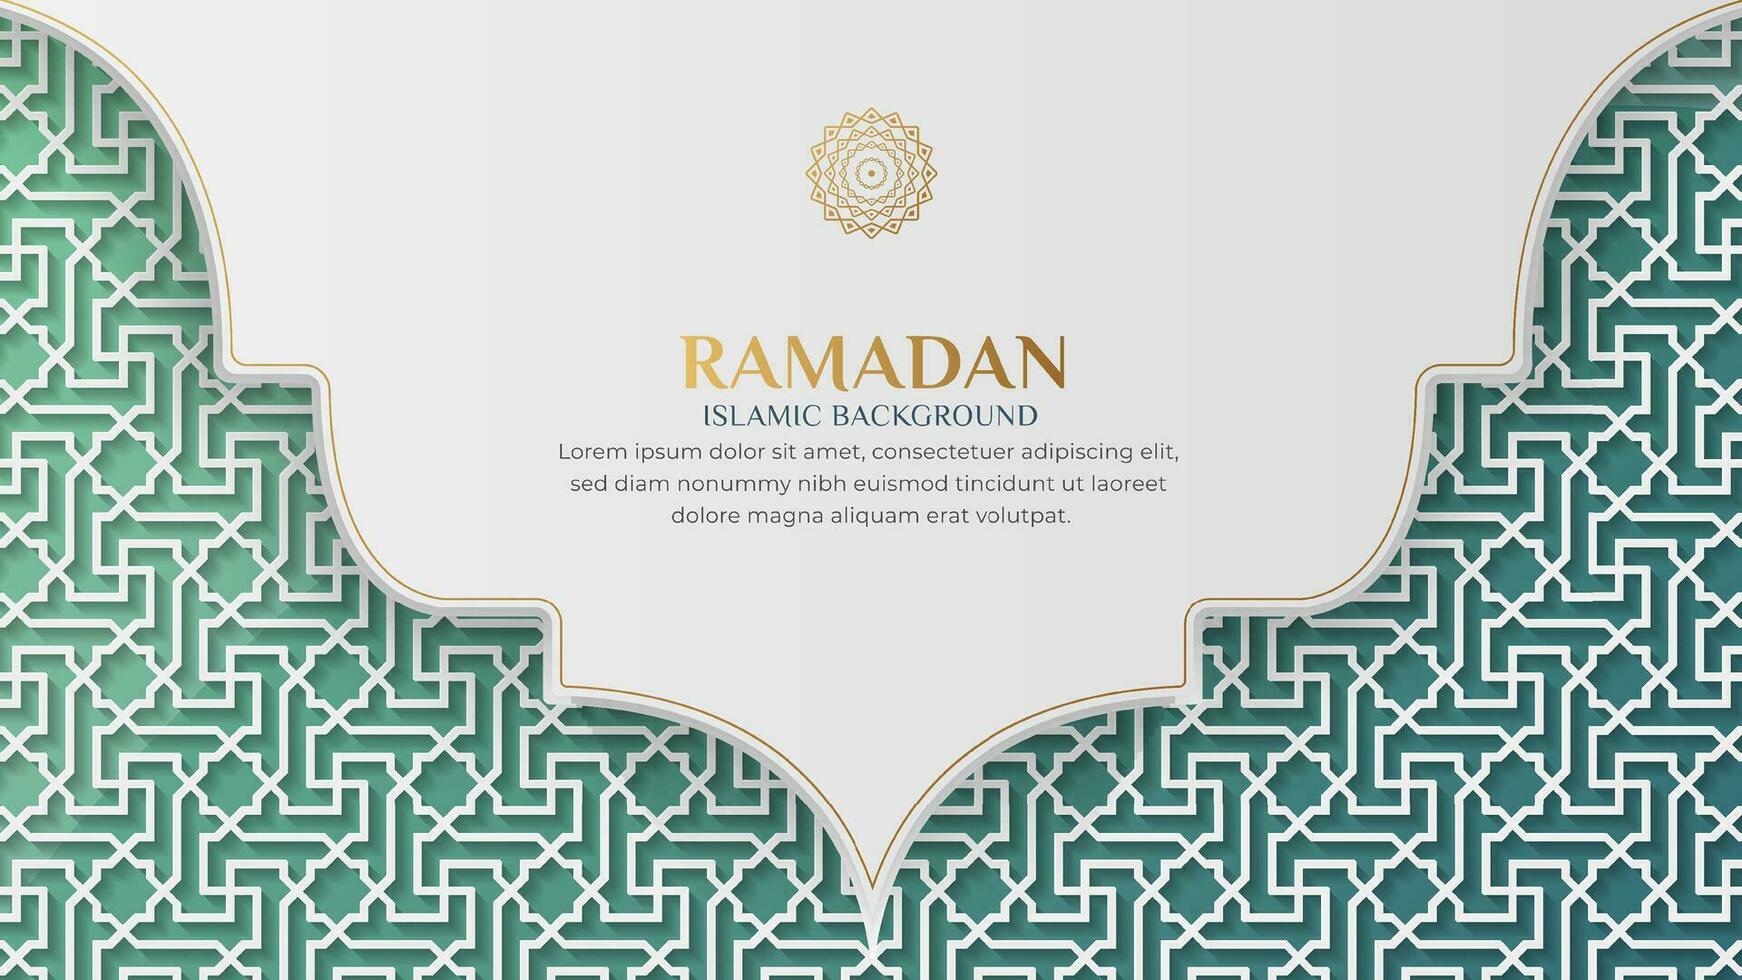 Ramadan Kareem Arabic Islamic Elegant White and Green Ornamental Background with Islamic Pattern and Decorative Ornament Arch Frame vector